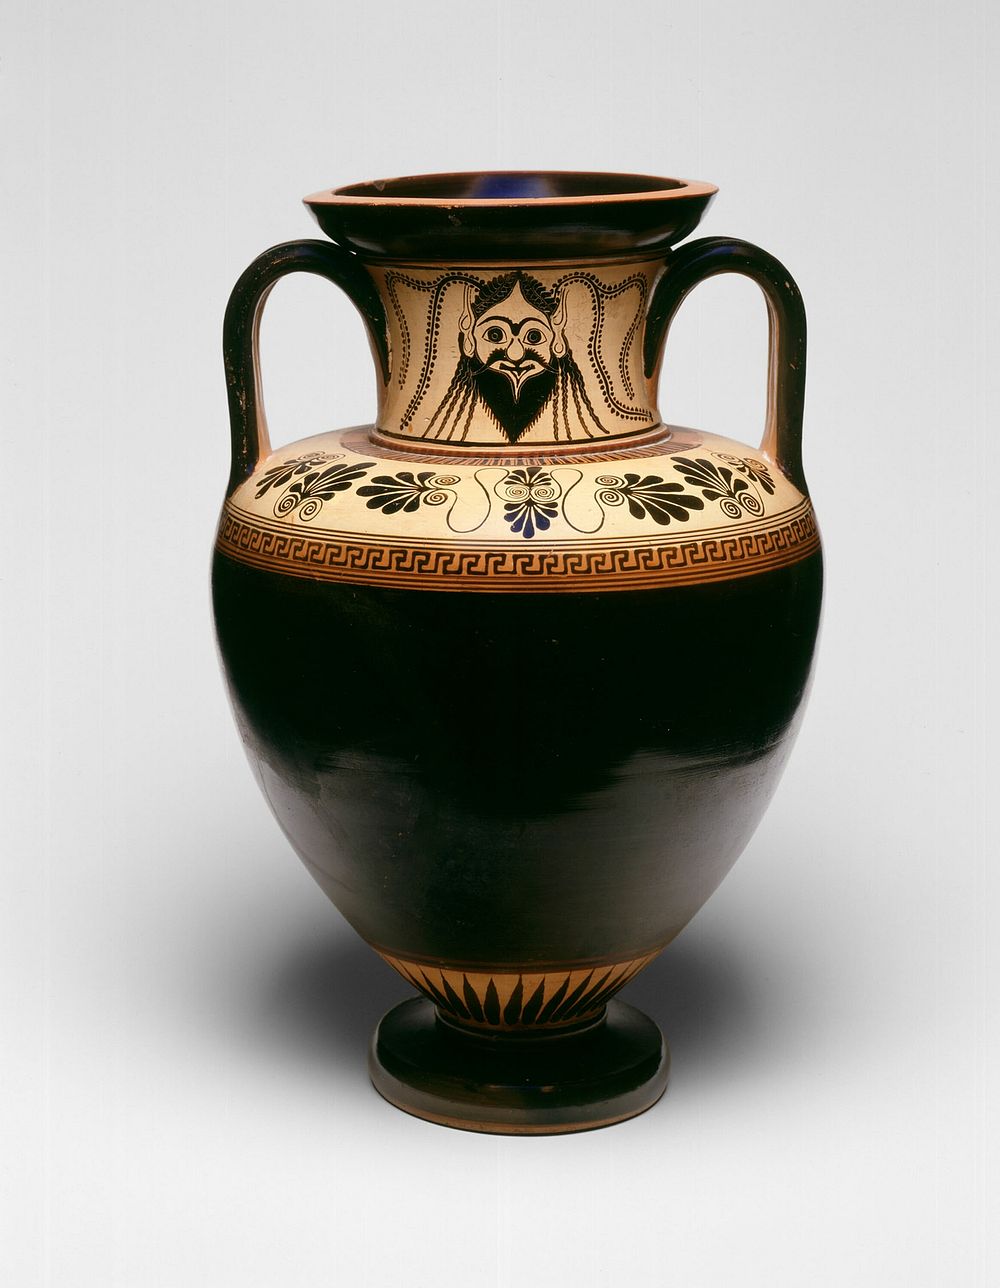 Amphora (Storage Jar) by Ancient Greek